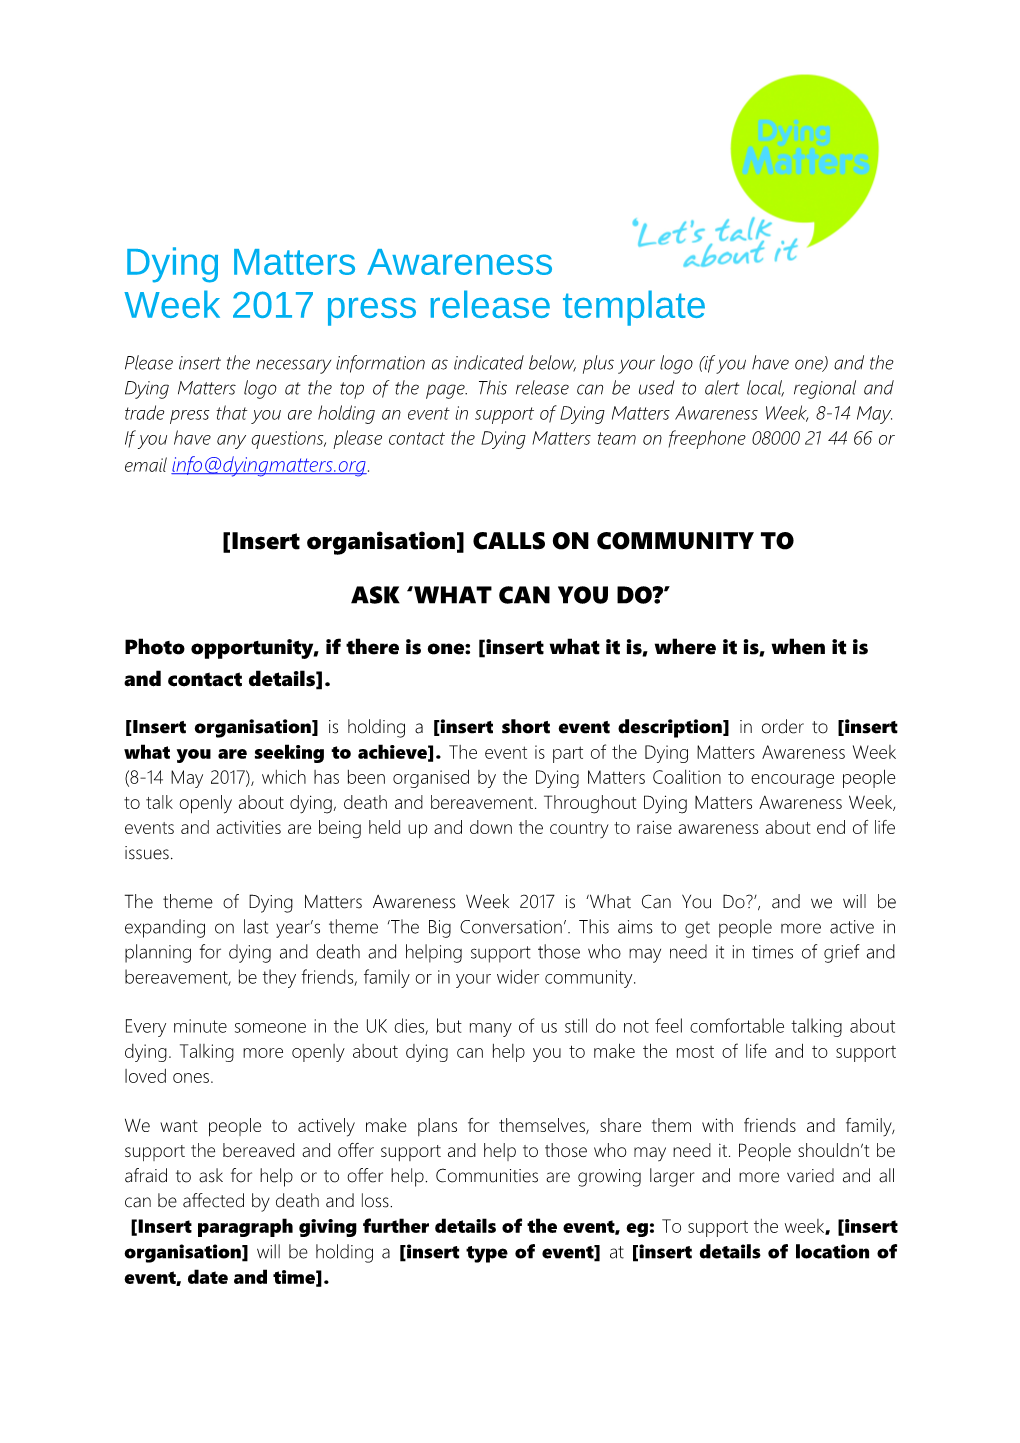 Dying Matters Awareness Week 2017 Press Release Template